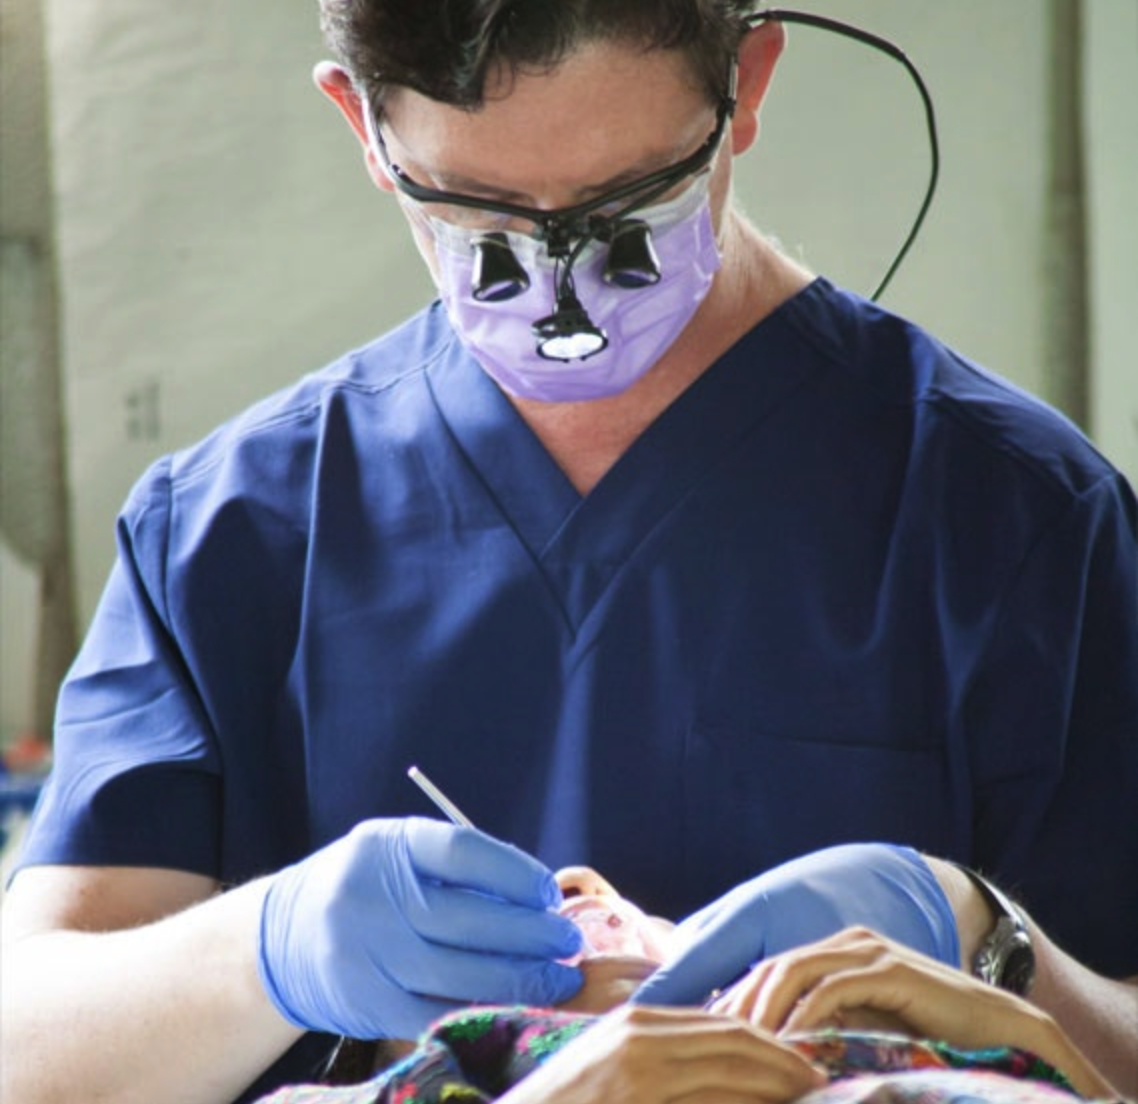 Dentist at work | Parkway Dental: Michael D Haight, DDS | Albuquerque, NM Parkway Dental: Michael D Haight, DDS Albuquerque (505)298-7479